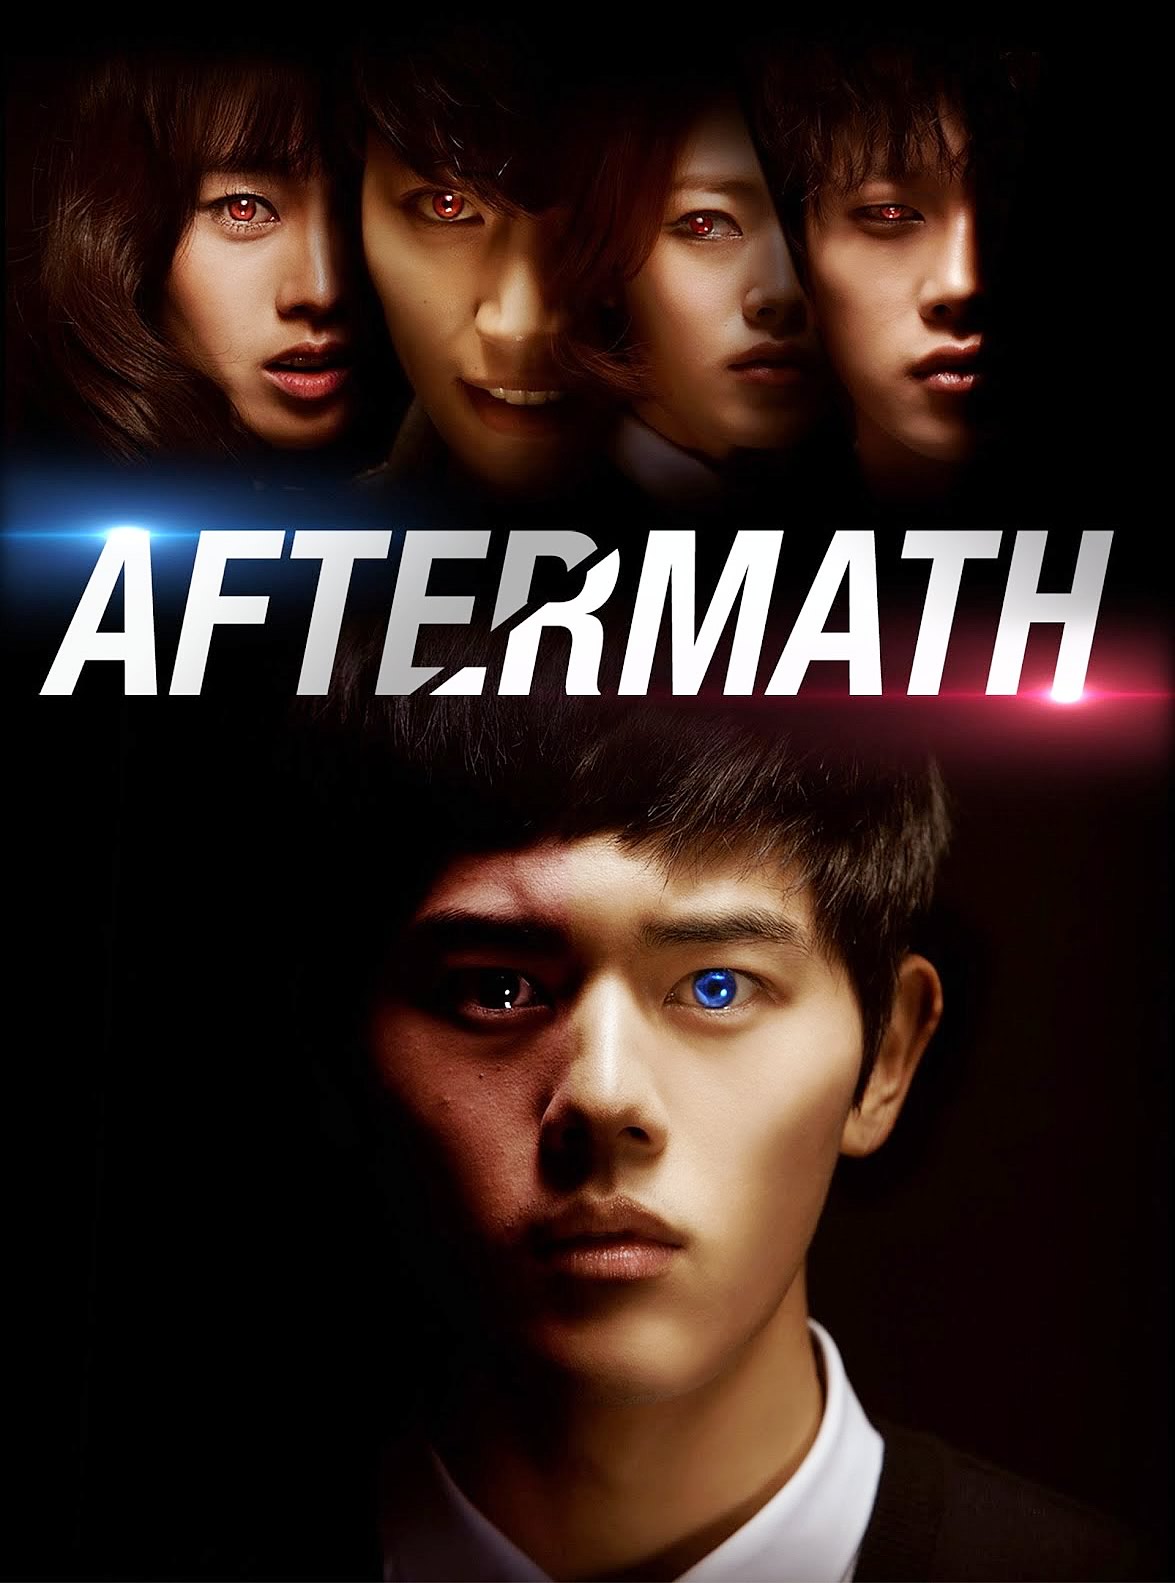 Aftermath | Dorama criminal supernatural sul-coreano baseado no popular Naver Webtoon de Kim Sun Kwon